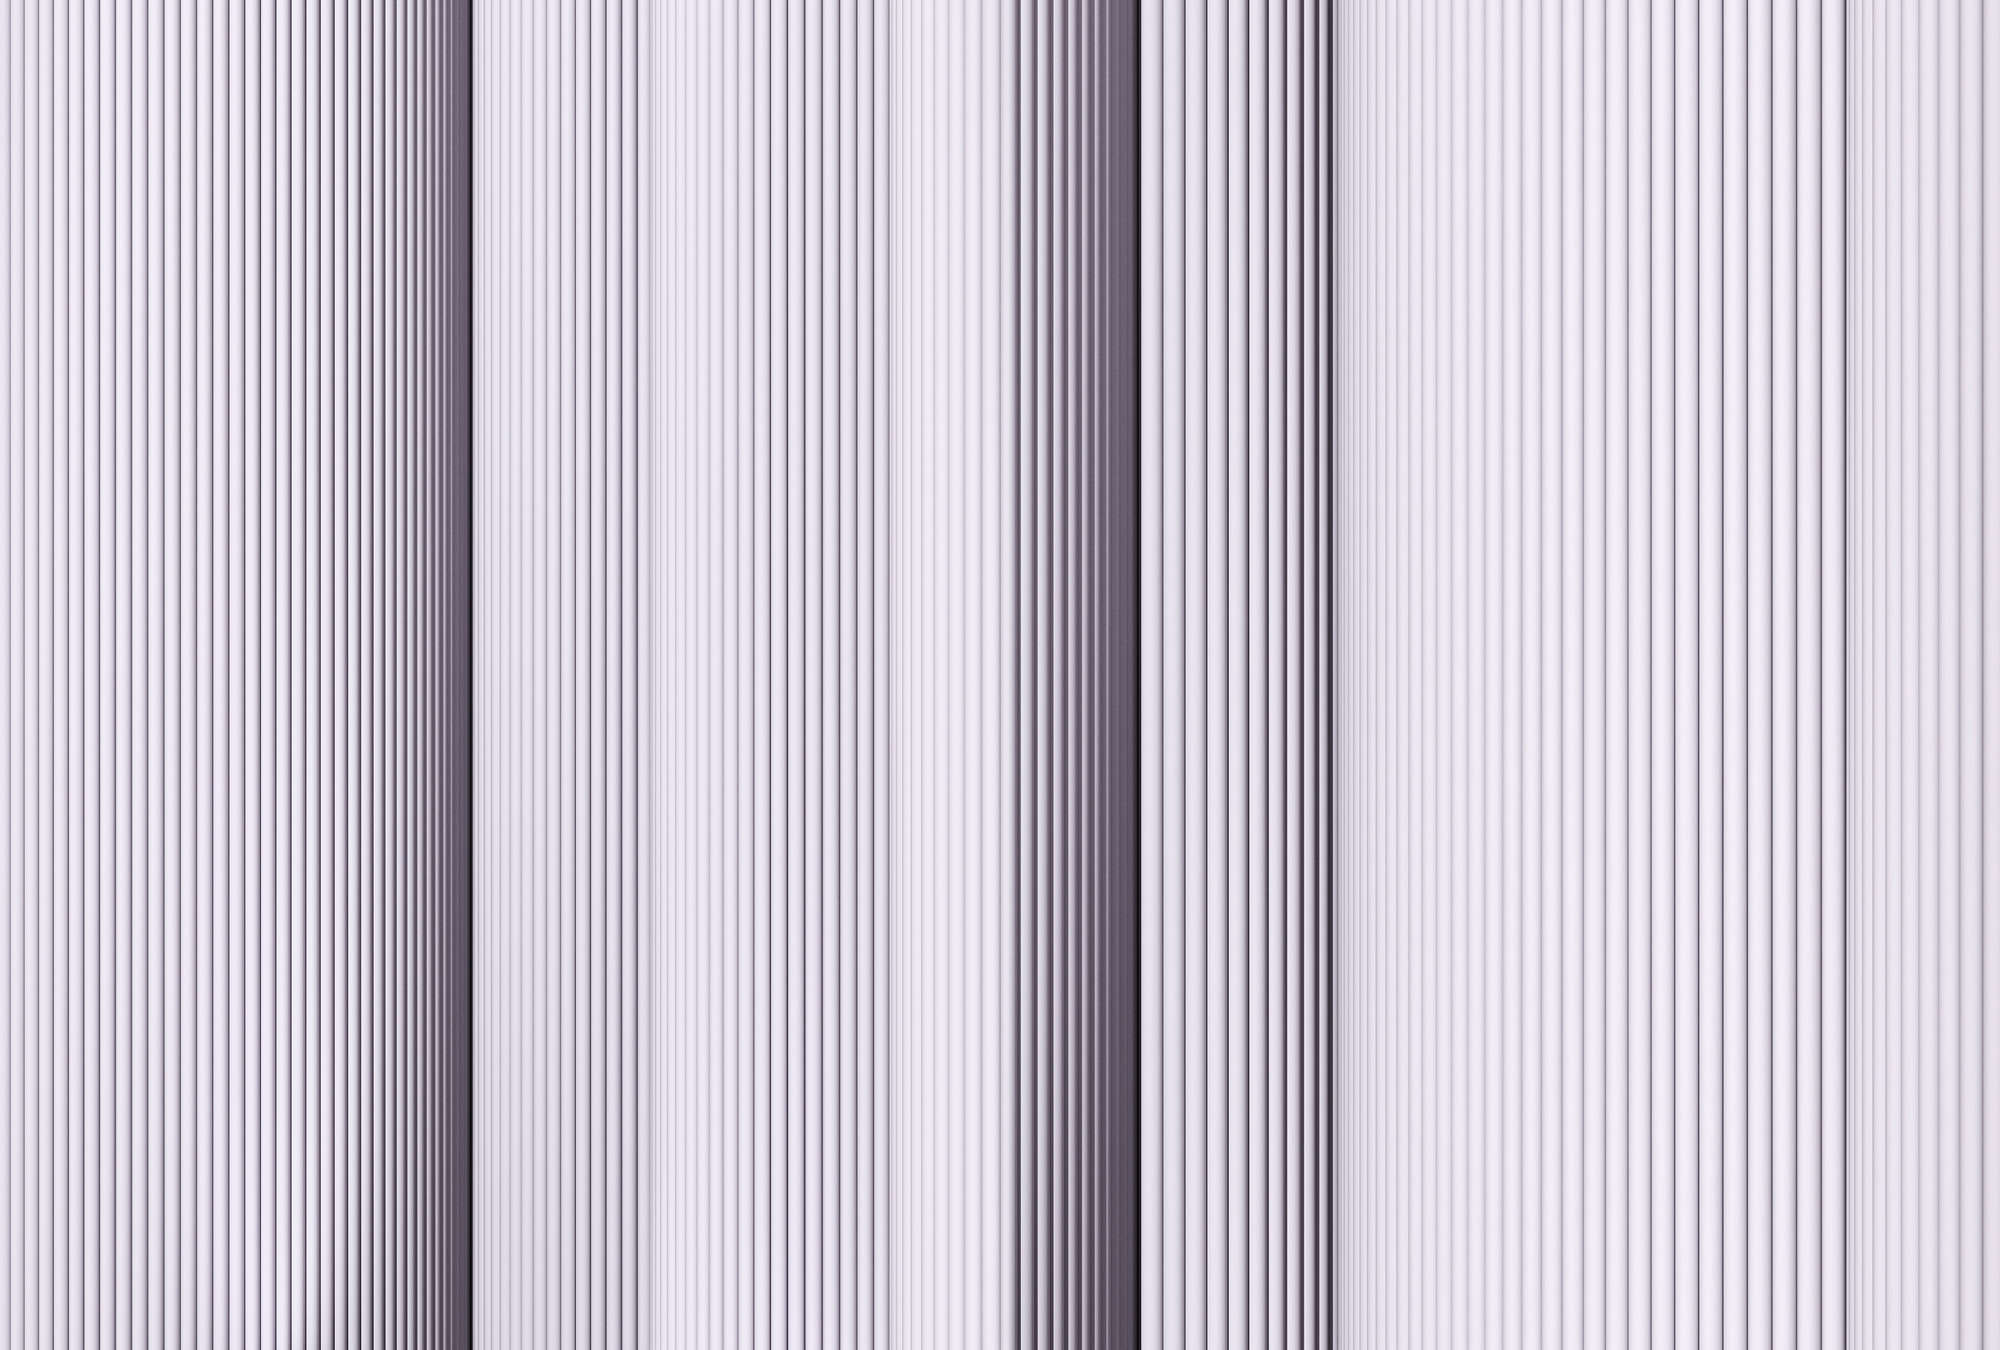             Magic Wall 1 - Stripe Wallpaper 3D Illusion Effect, Purple & White
        